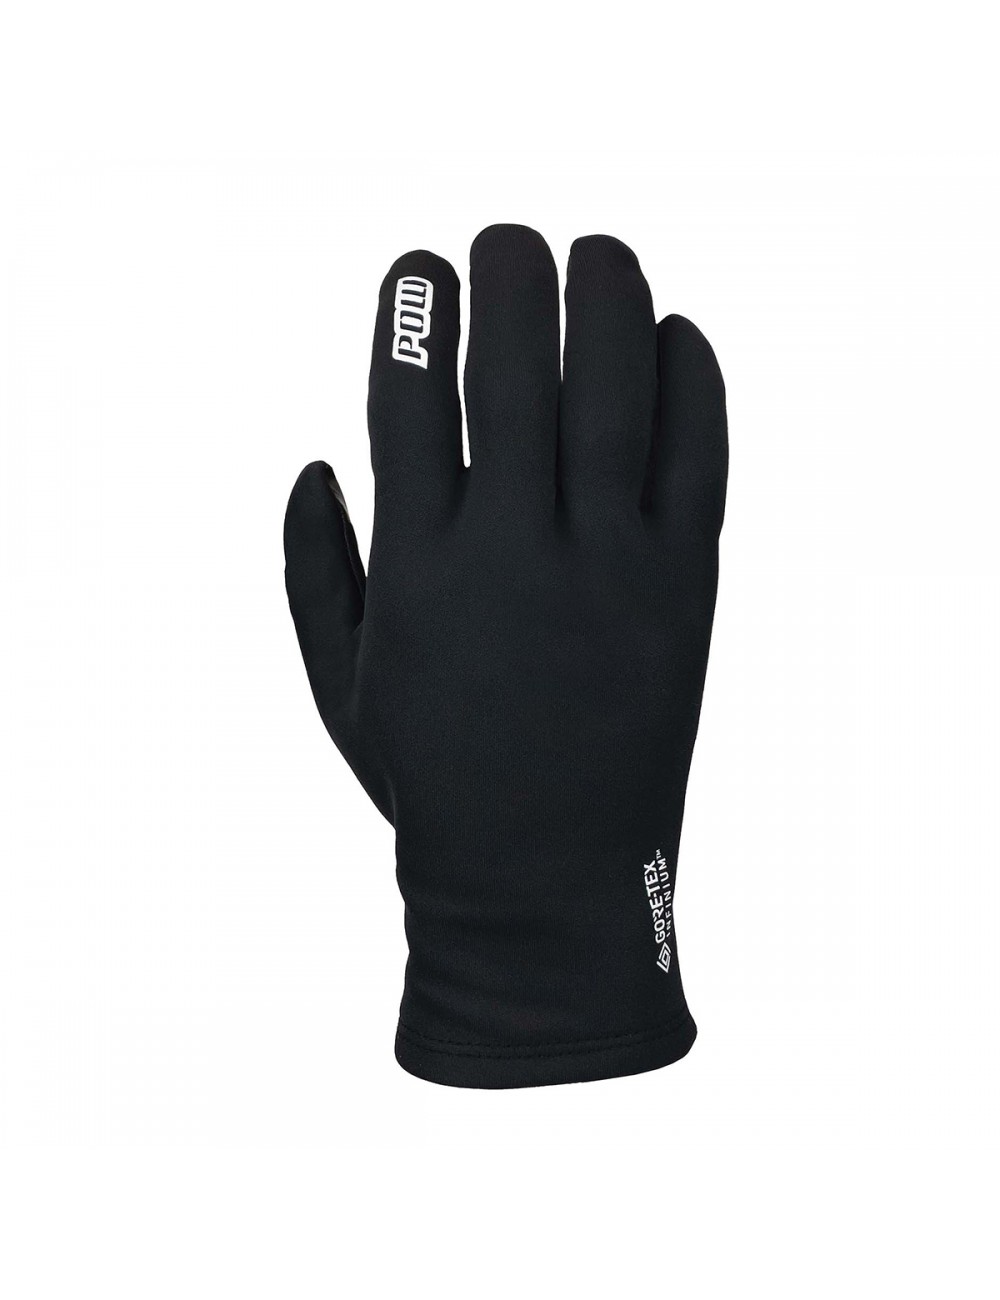 POW Trojan GTX Infinium Liner Glove - Black